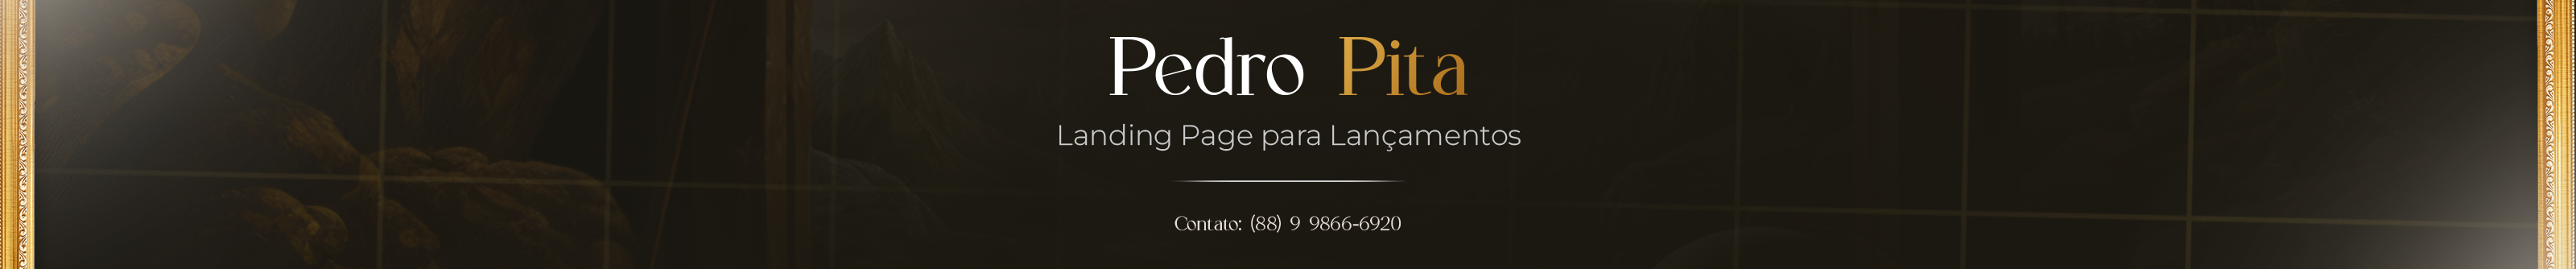 Banner de perfil de Pedro Pita